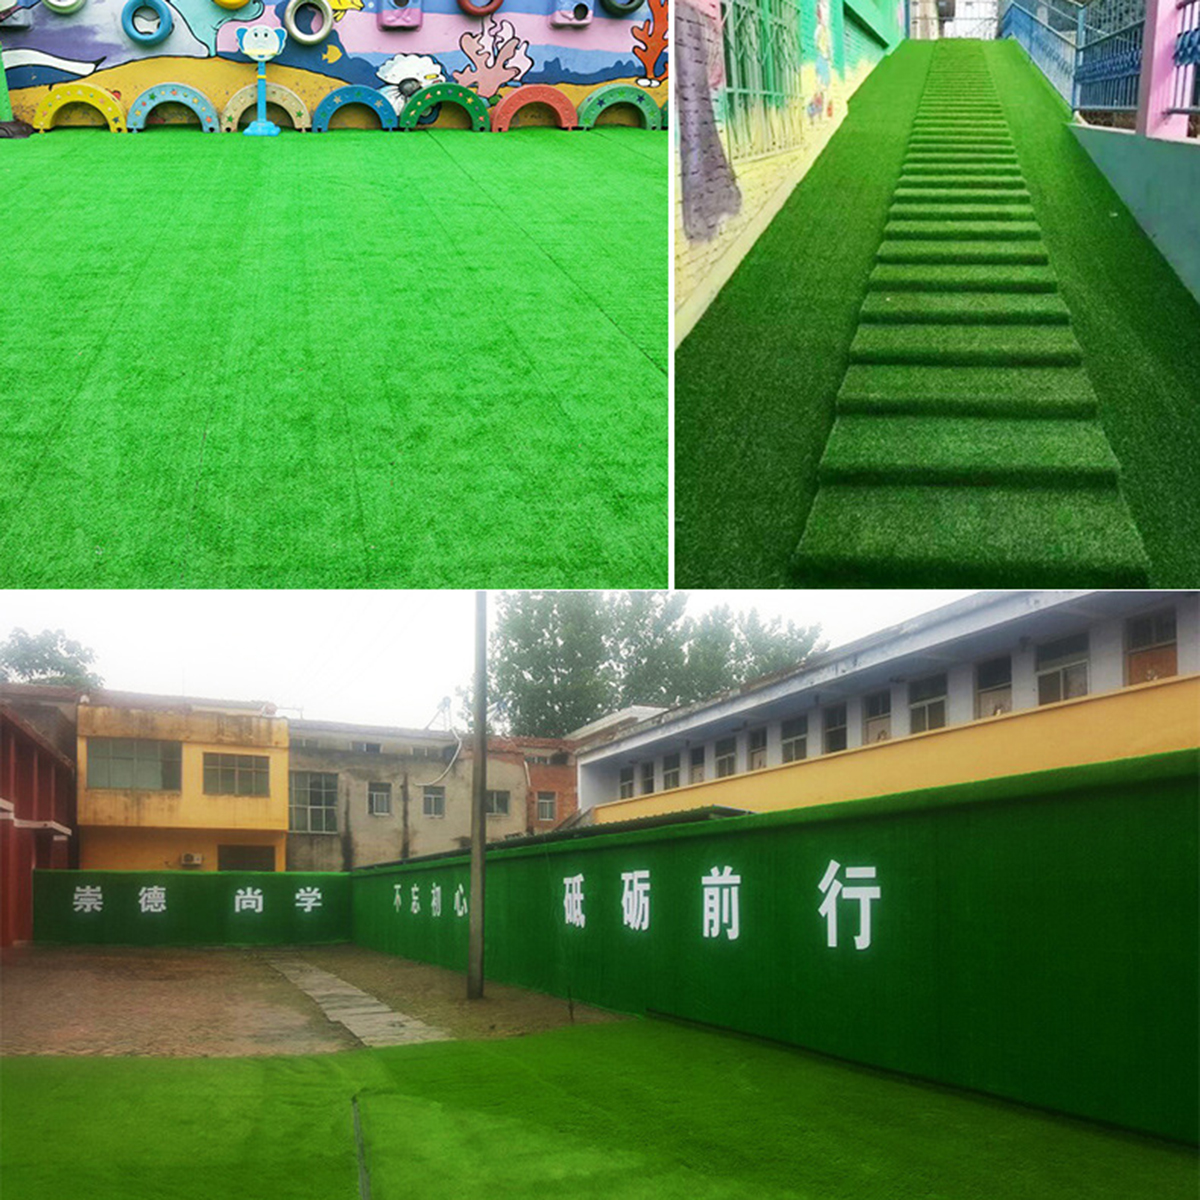 Artificial-Lawn-Turf-Grass-Artificial-Lawn-Carpet-Simulation-Outdoor-Green-Lawn-for-Garden-Patio-Lan-1789361-7